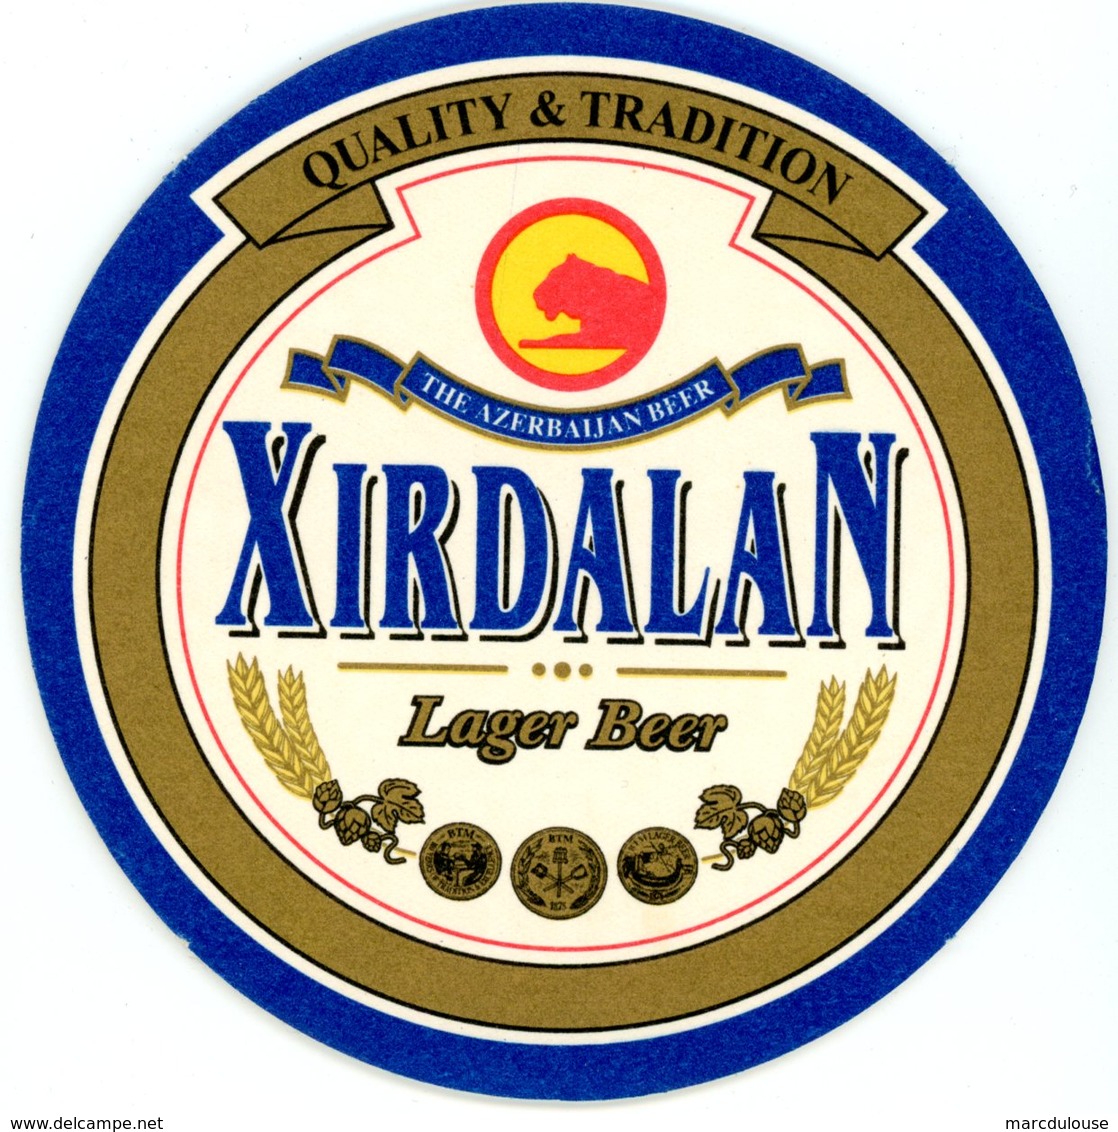 Azerbaycan. Azerbaijan. Xirdalan. Lager Beer. Quality & Tradition. The Azerbaijan Beer. - Sous-bocks